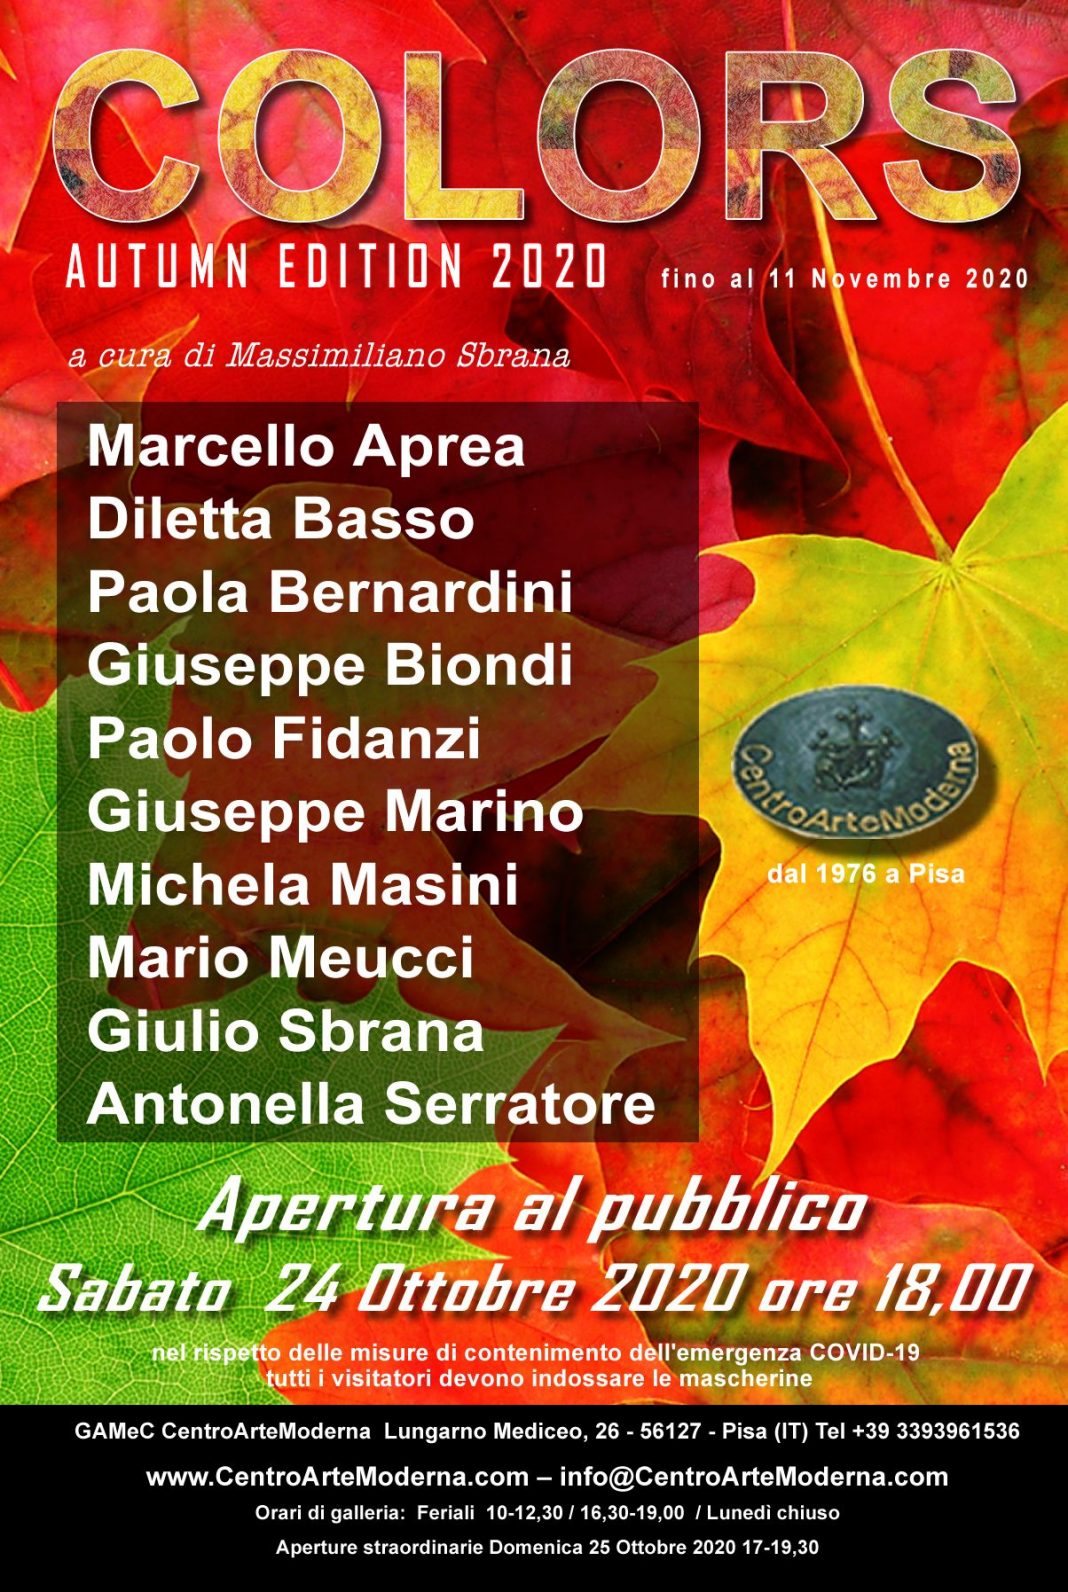 Colors: Autumn Edition 2020https://www.exibart.com/repository/media/formidable/11/invito-colors-autumn-2020-1068x1592.jpg